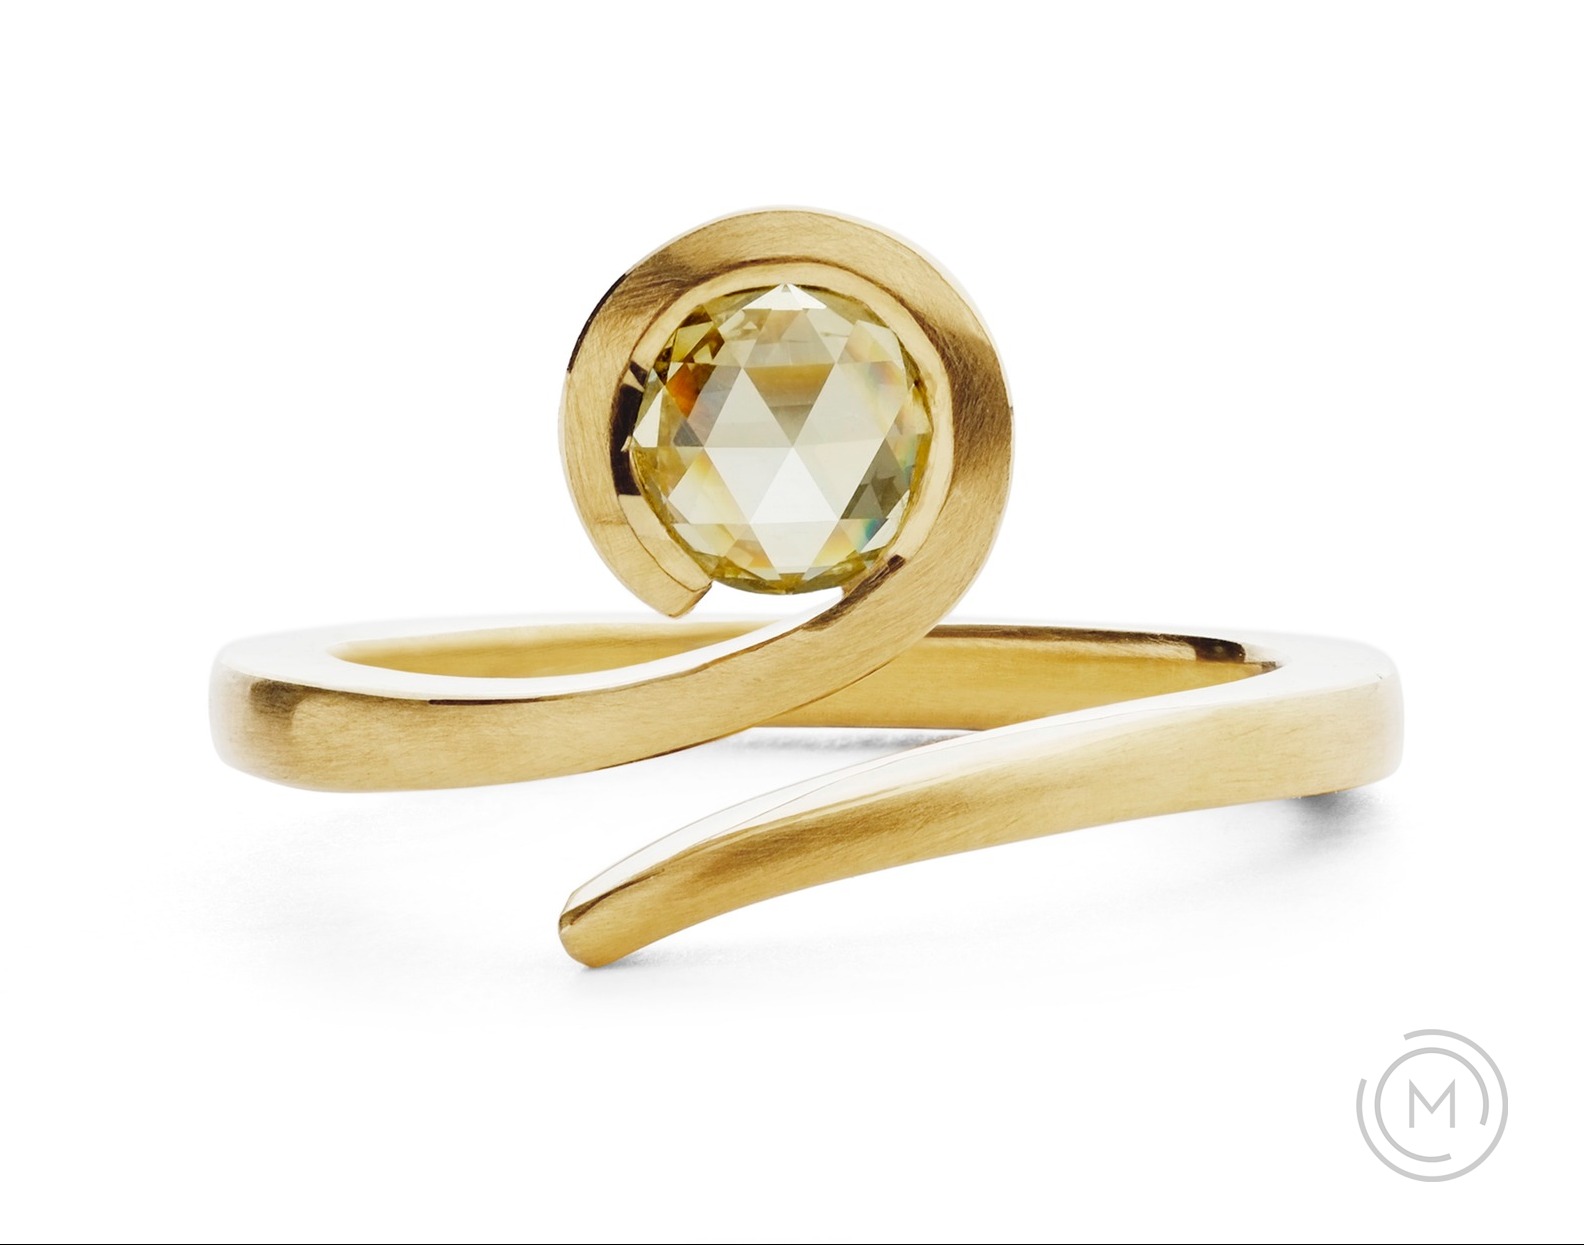 Modern 'Twist' engagement ring with rose-cut yellow diamond